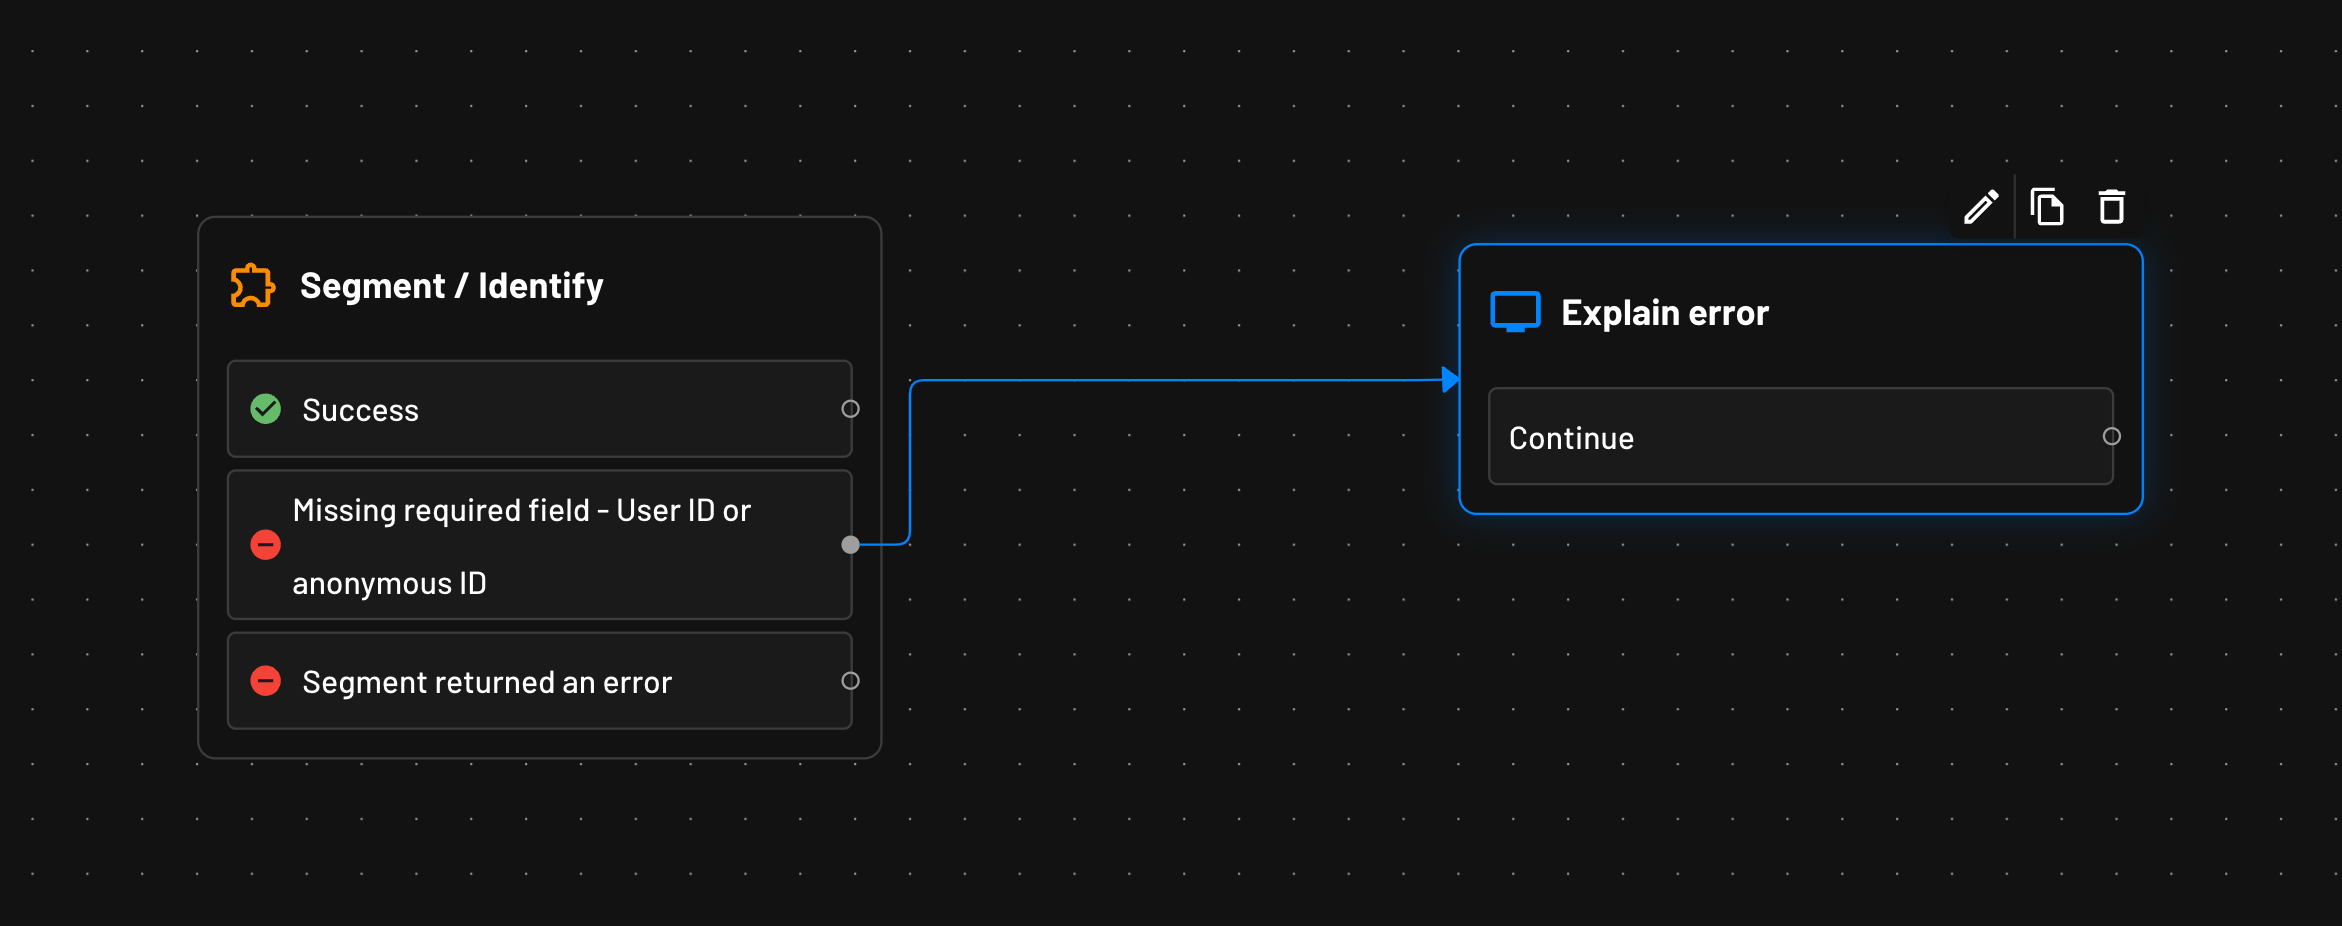 Descope example segment connector error handling connection within flow.